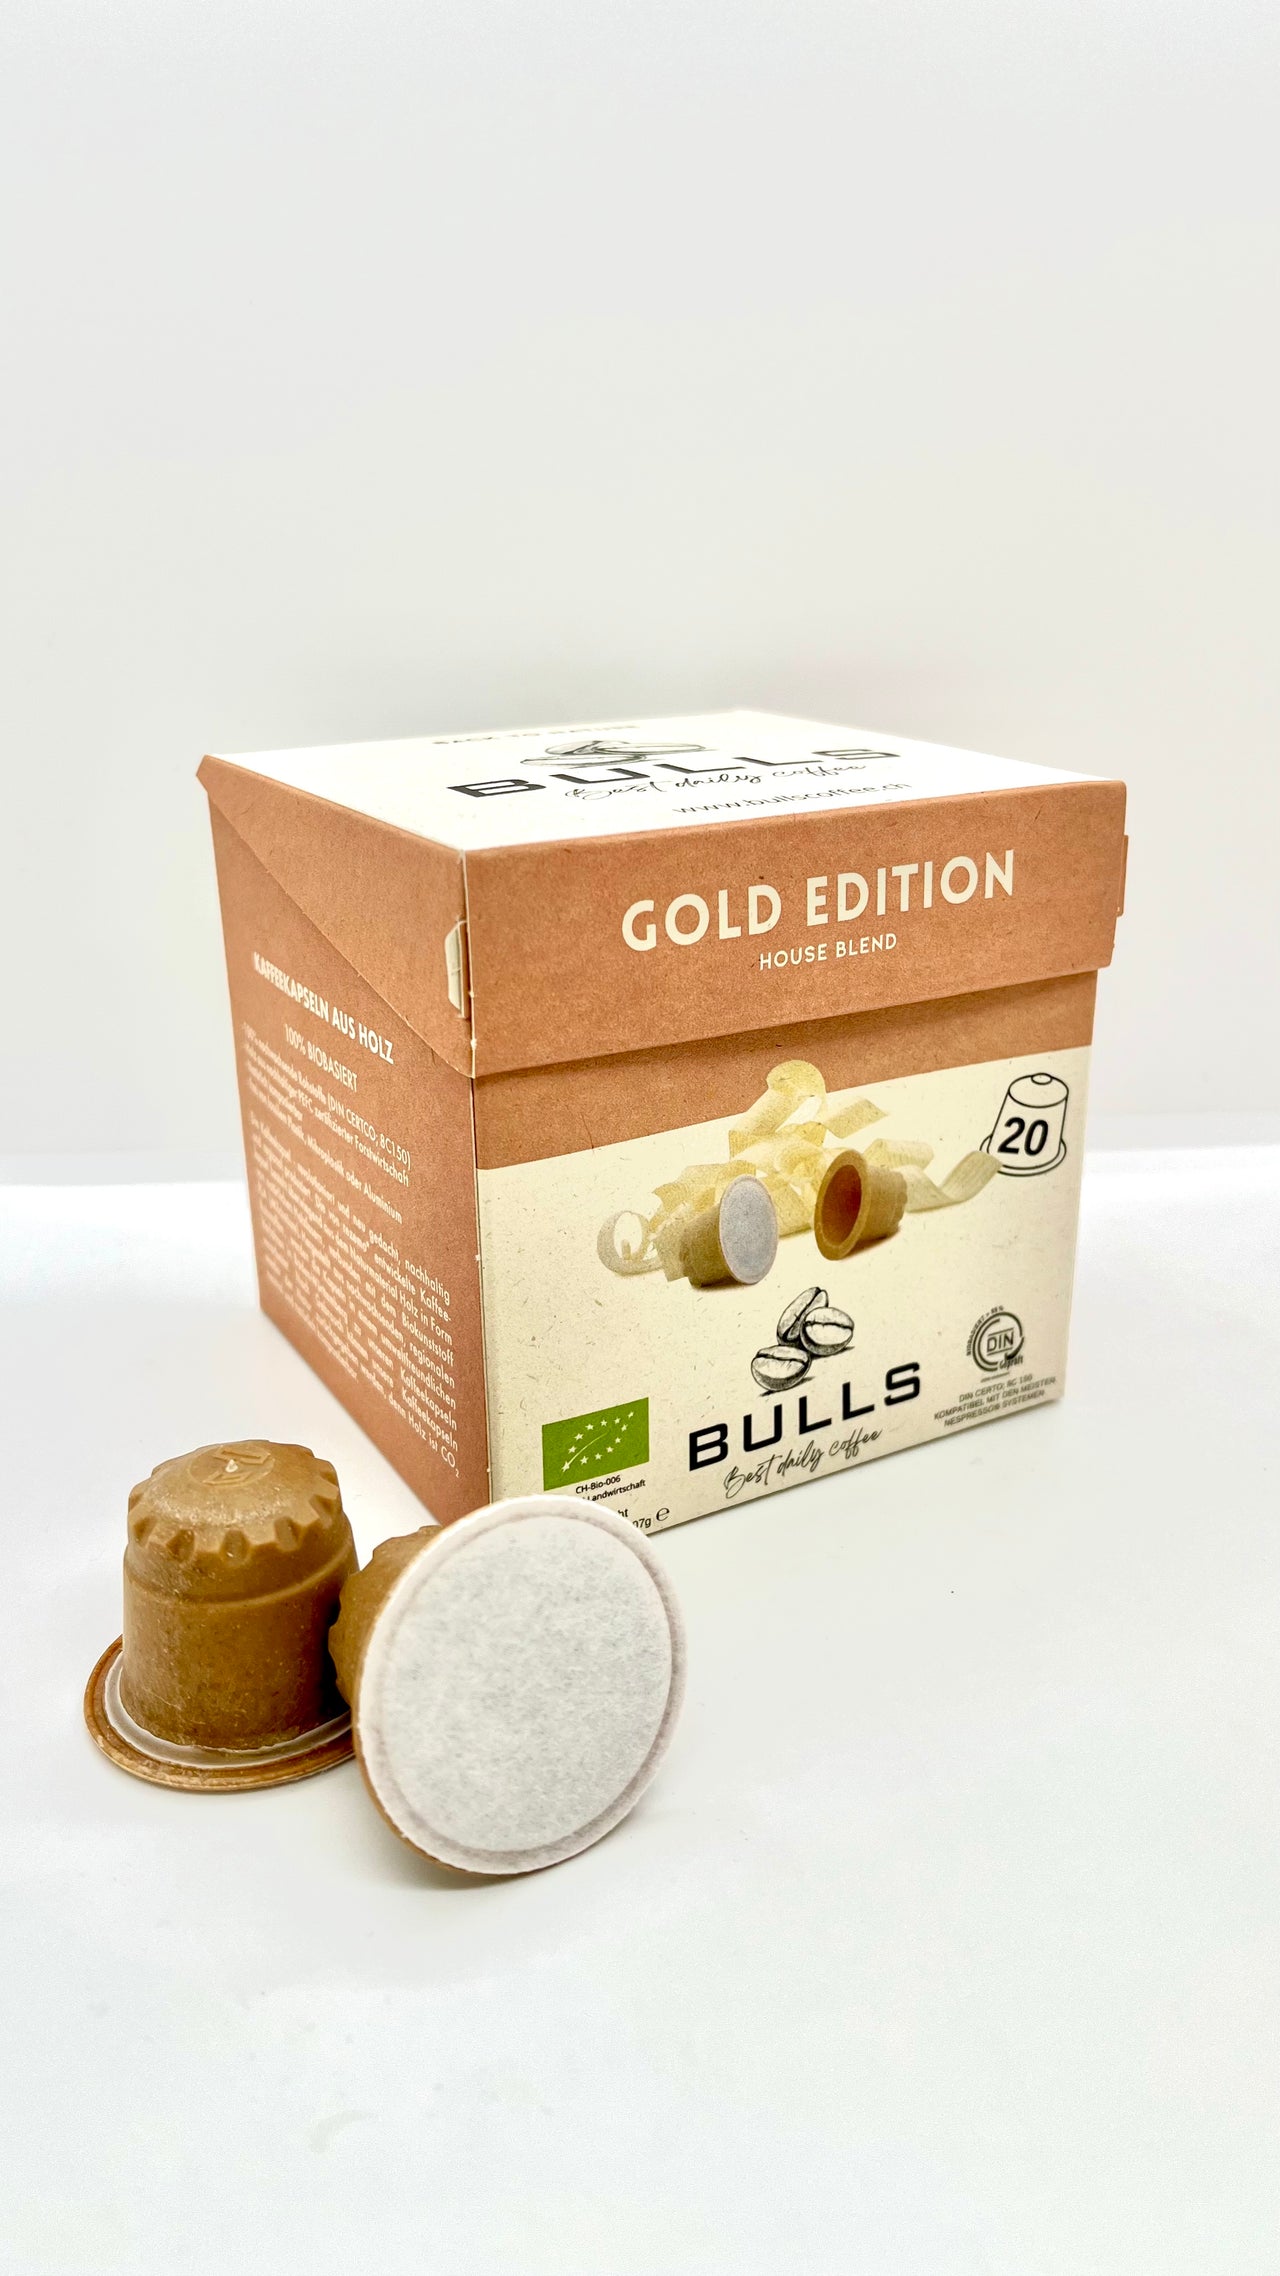 BULLS Gold Edition House Blend- Holzkapseln